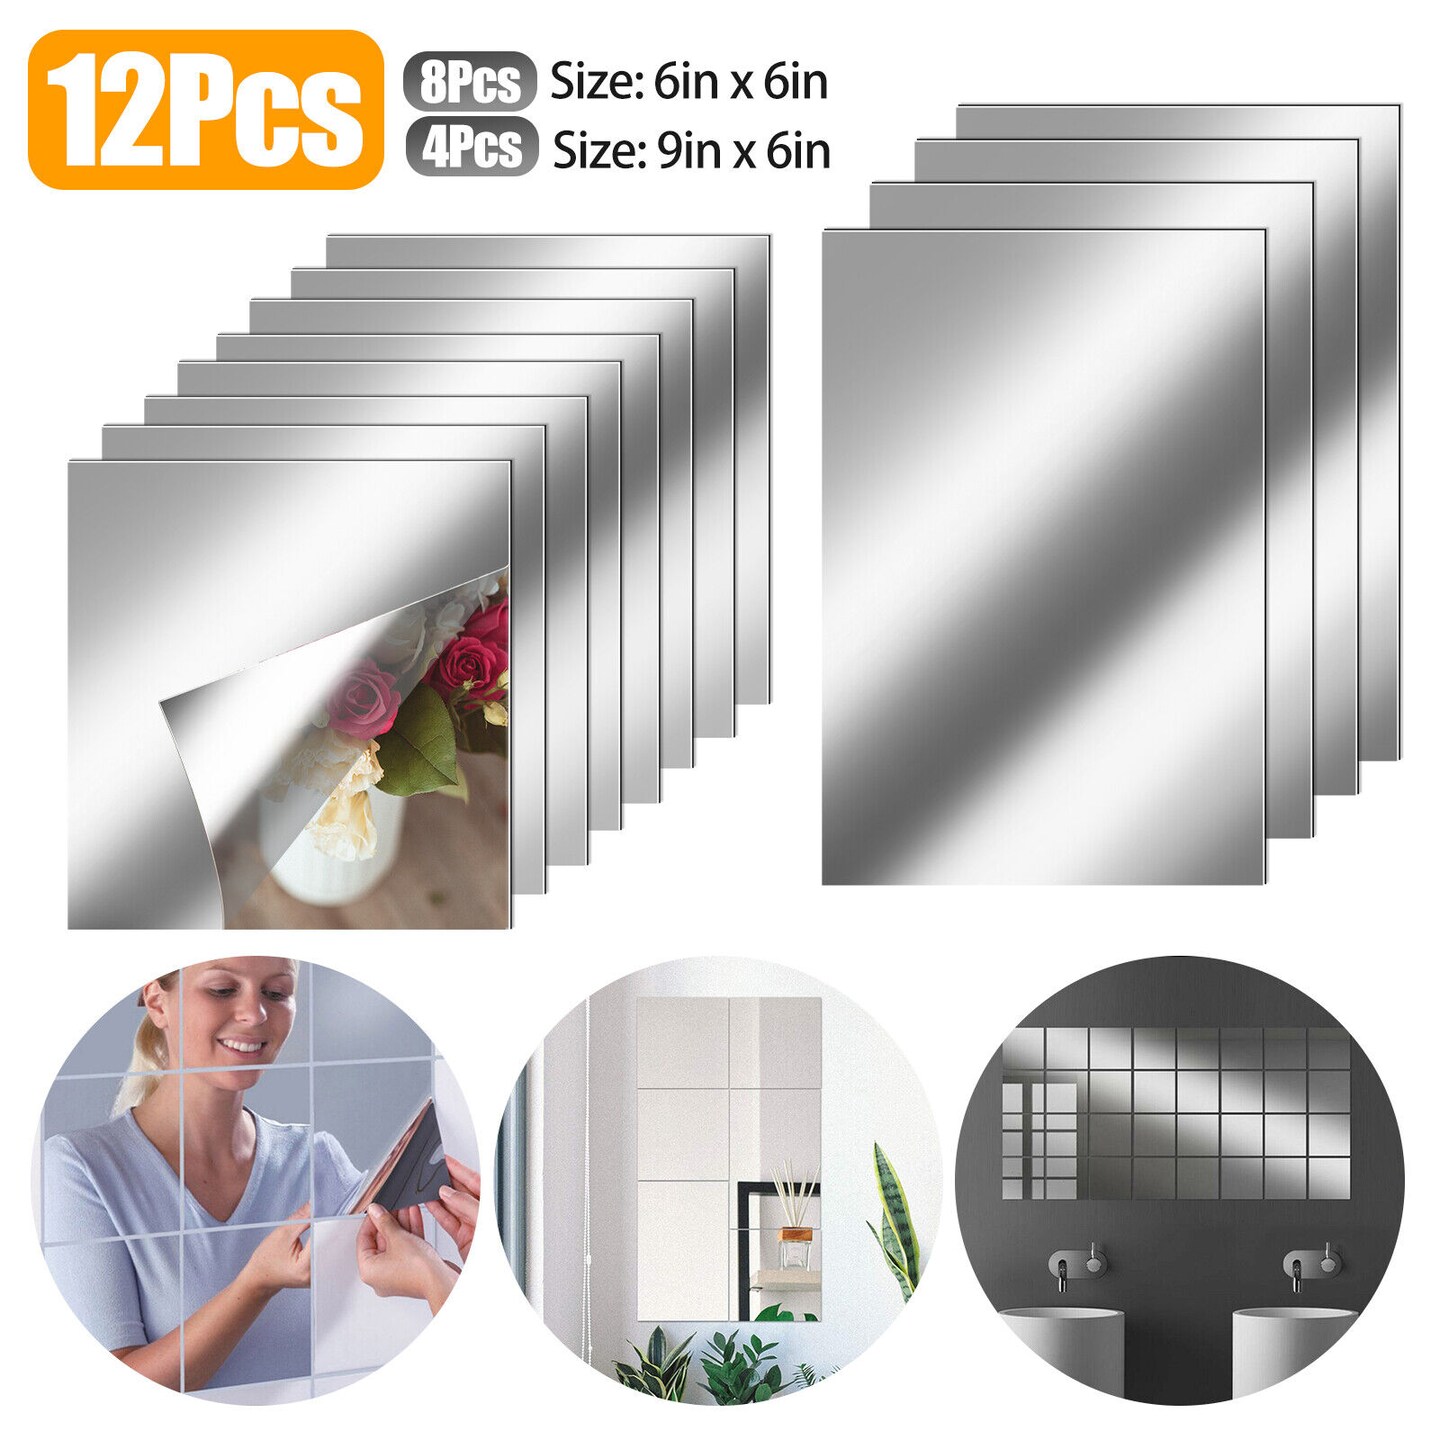 12Pcs Self-Adhesive Mirror Sheets for Reflective Home Wall Decor